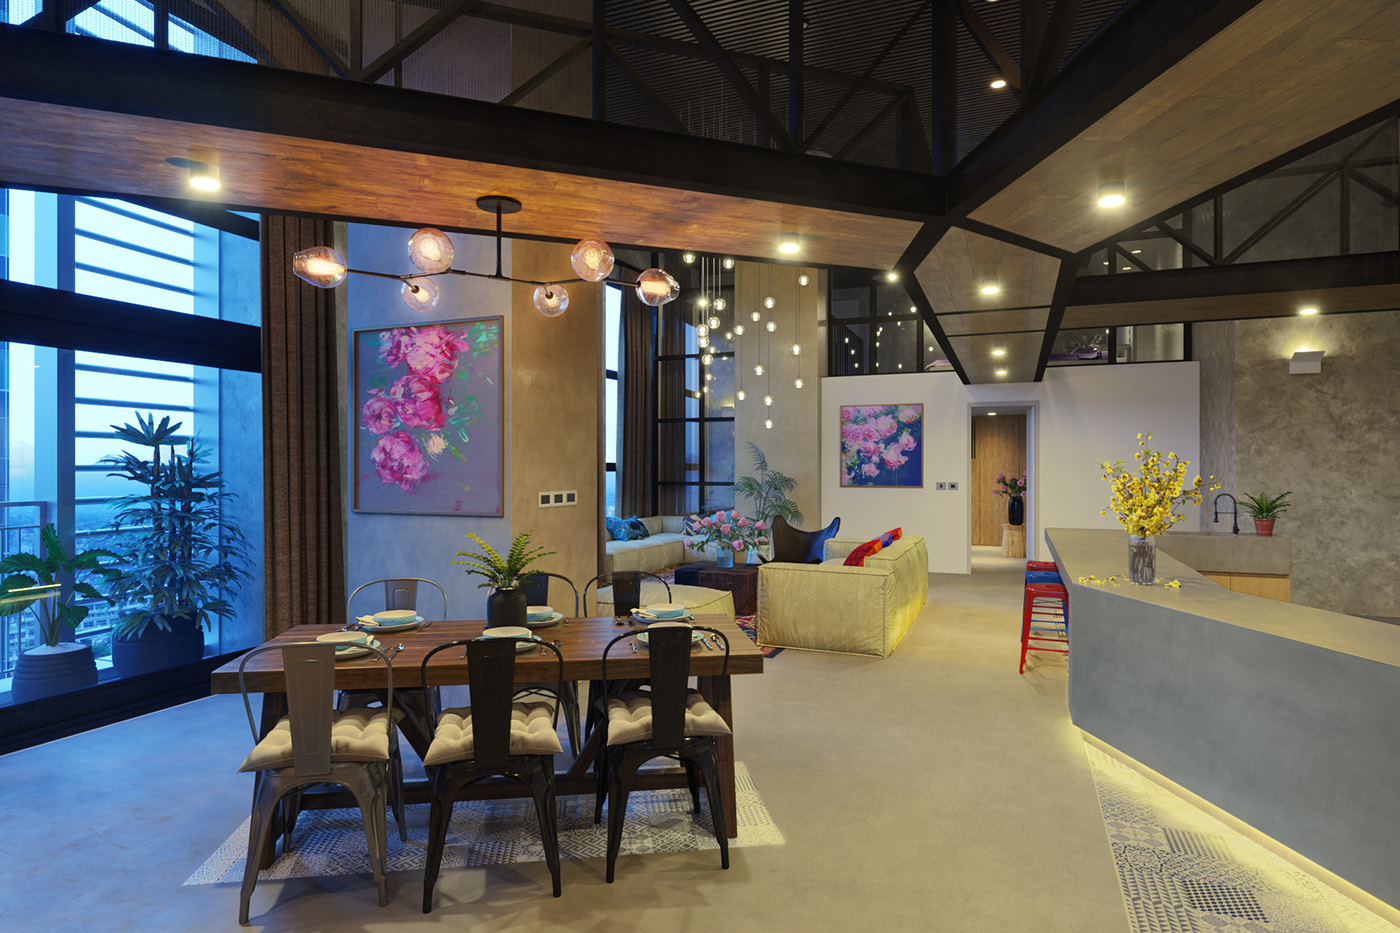 3dsmax corona render  Adobe Photoshop design Interior apartments CGI art living space rendering